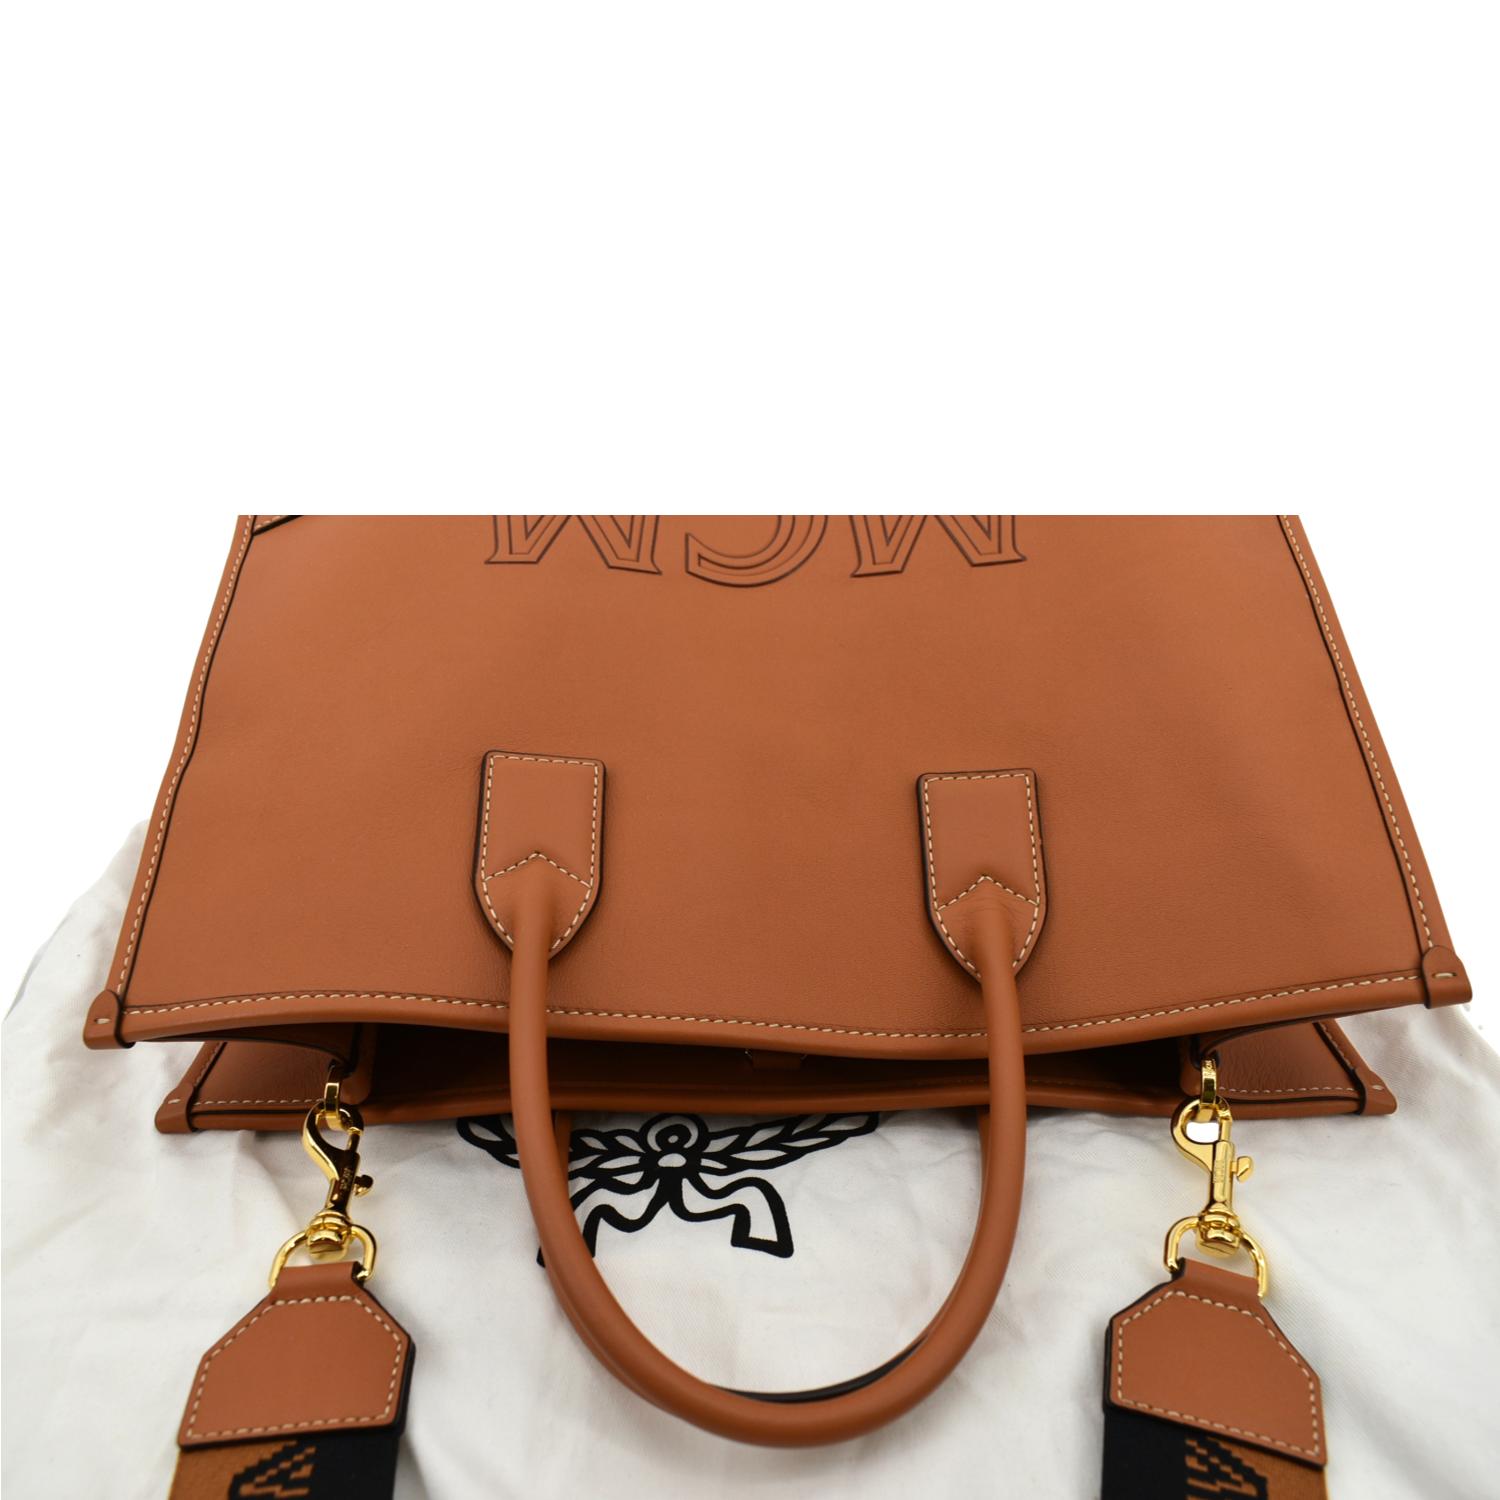 MCM Munchen New Black Canvas Monogram Shopping Shoulder Hand Bag L3016  15”x10”x5